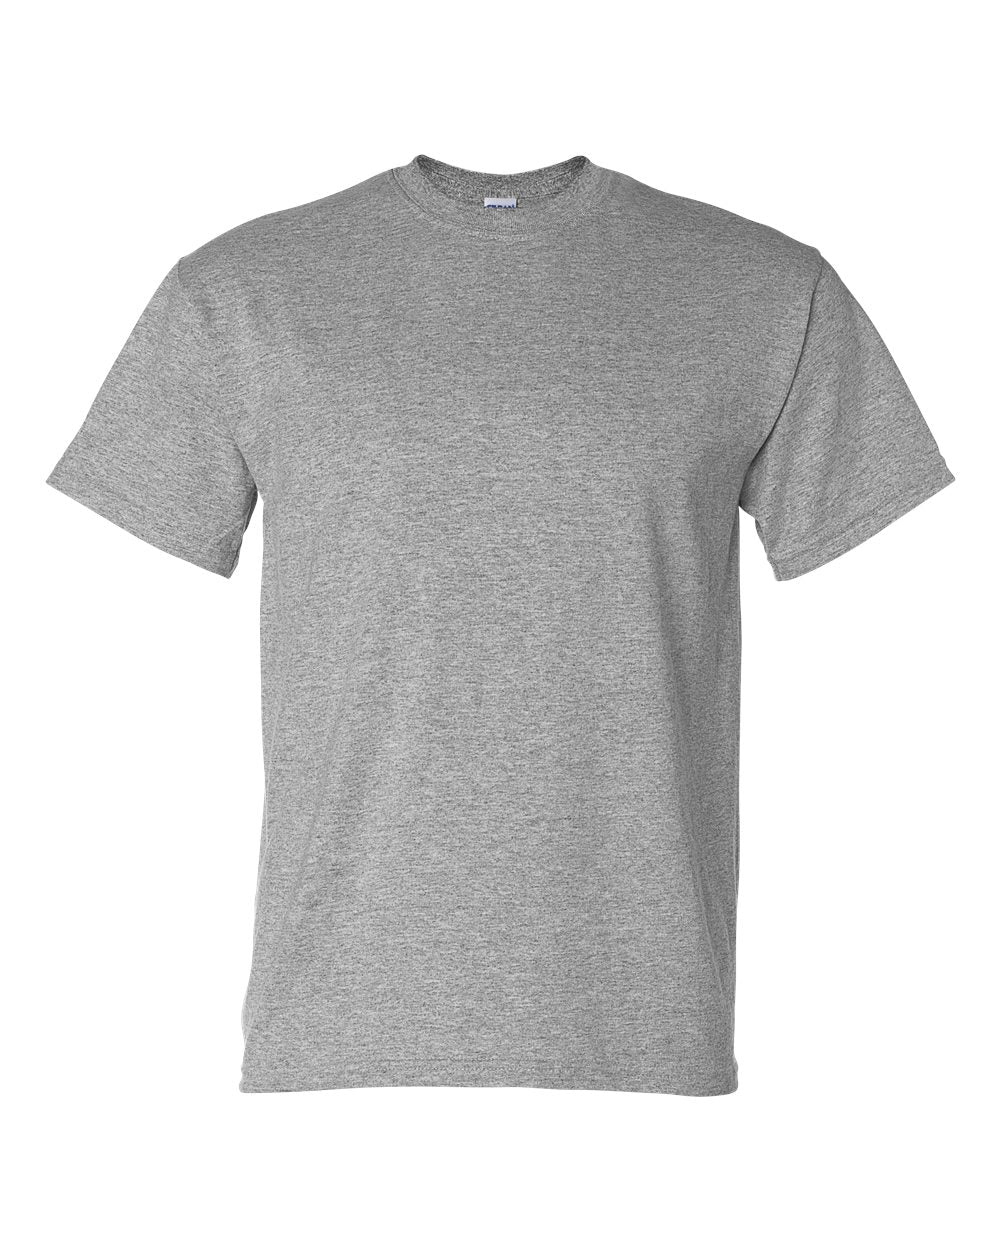 Gildan 8000 DryBlend T-Shirt :: Sport Grey, Size XL